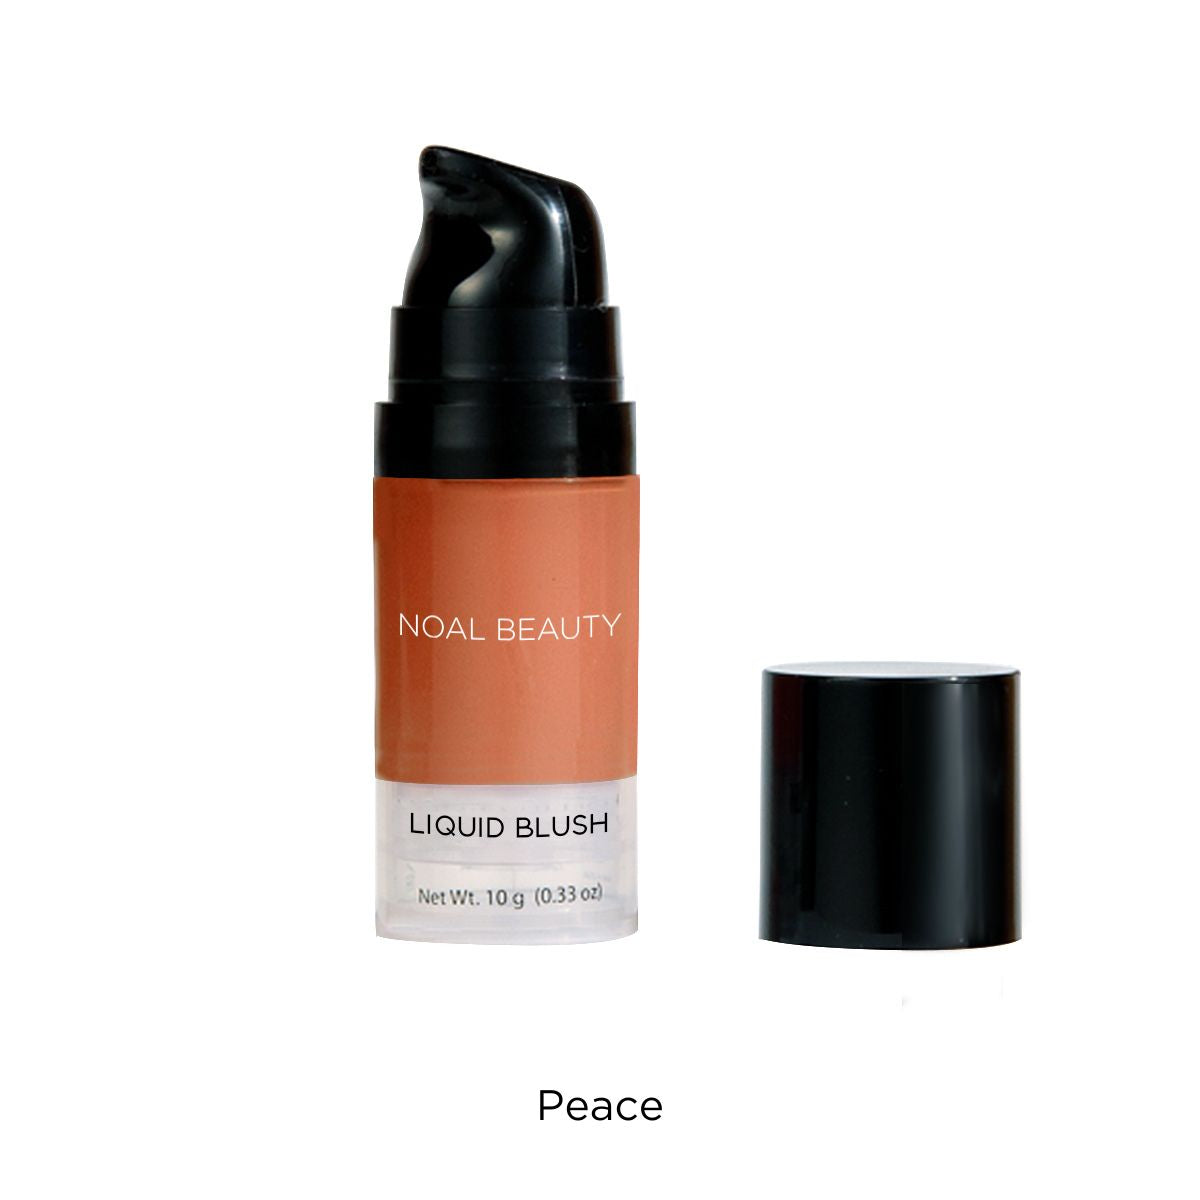 noal-beauty-peace-liquid-blush-bottle-2